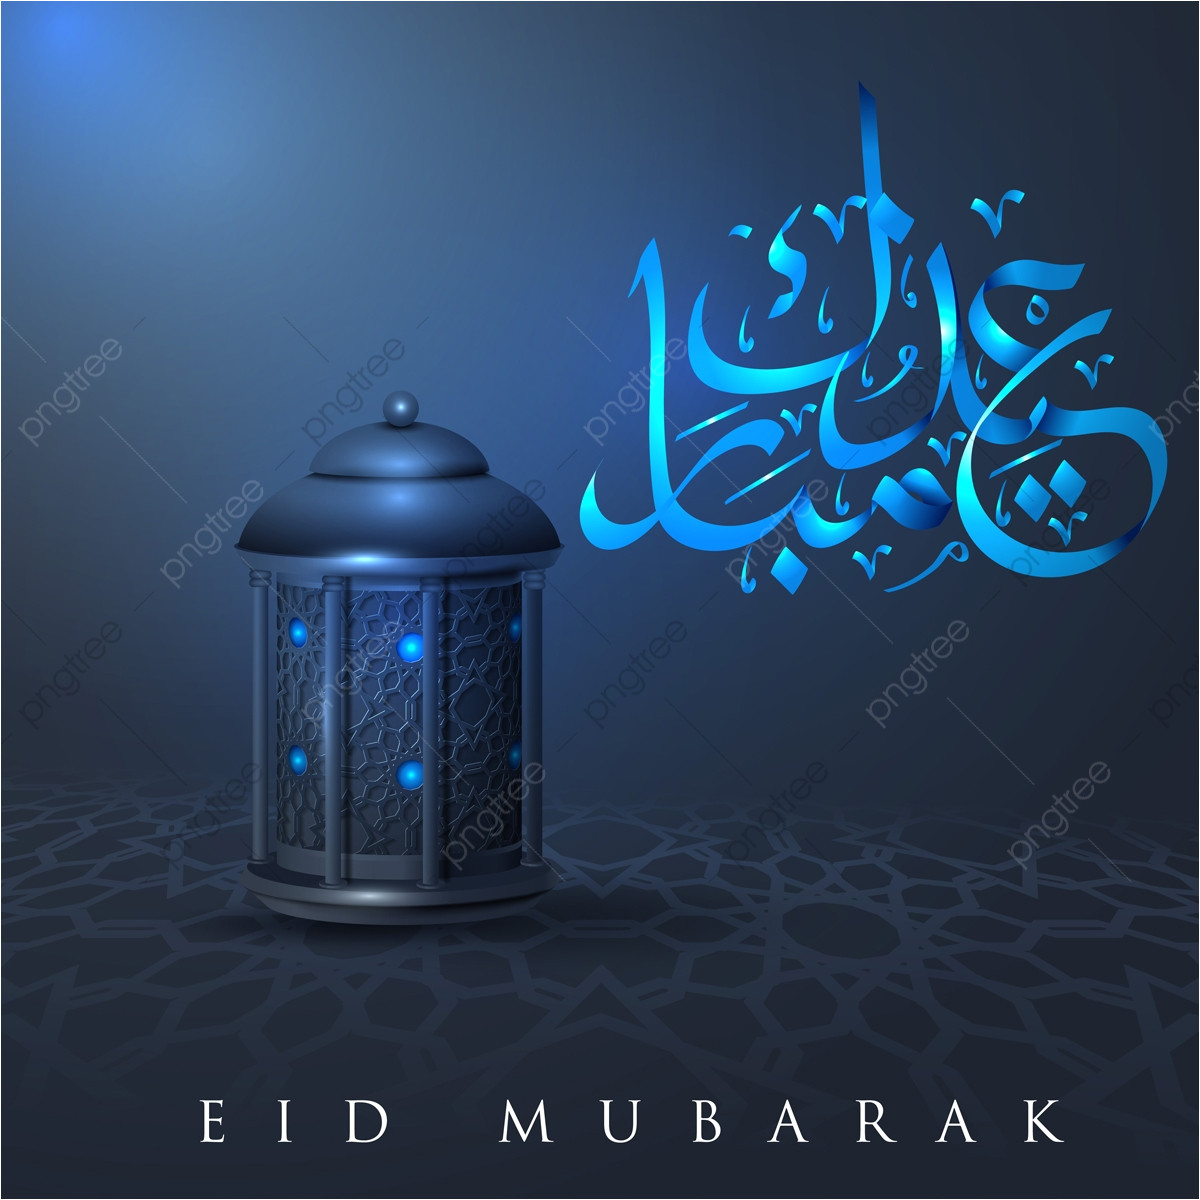 pngtree greeting card template islamic vector design for eid mubarak png image 4199340 jpg